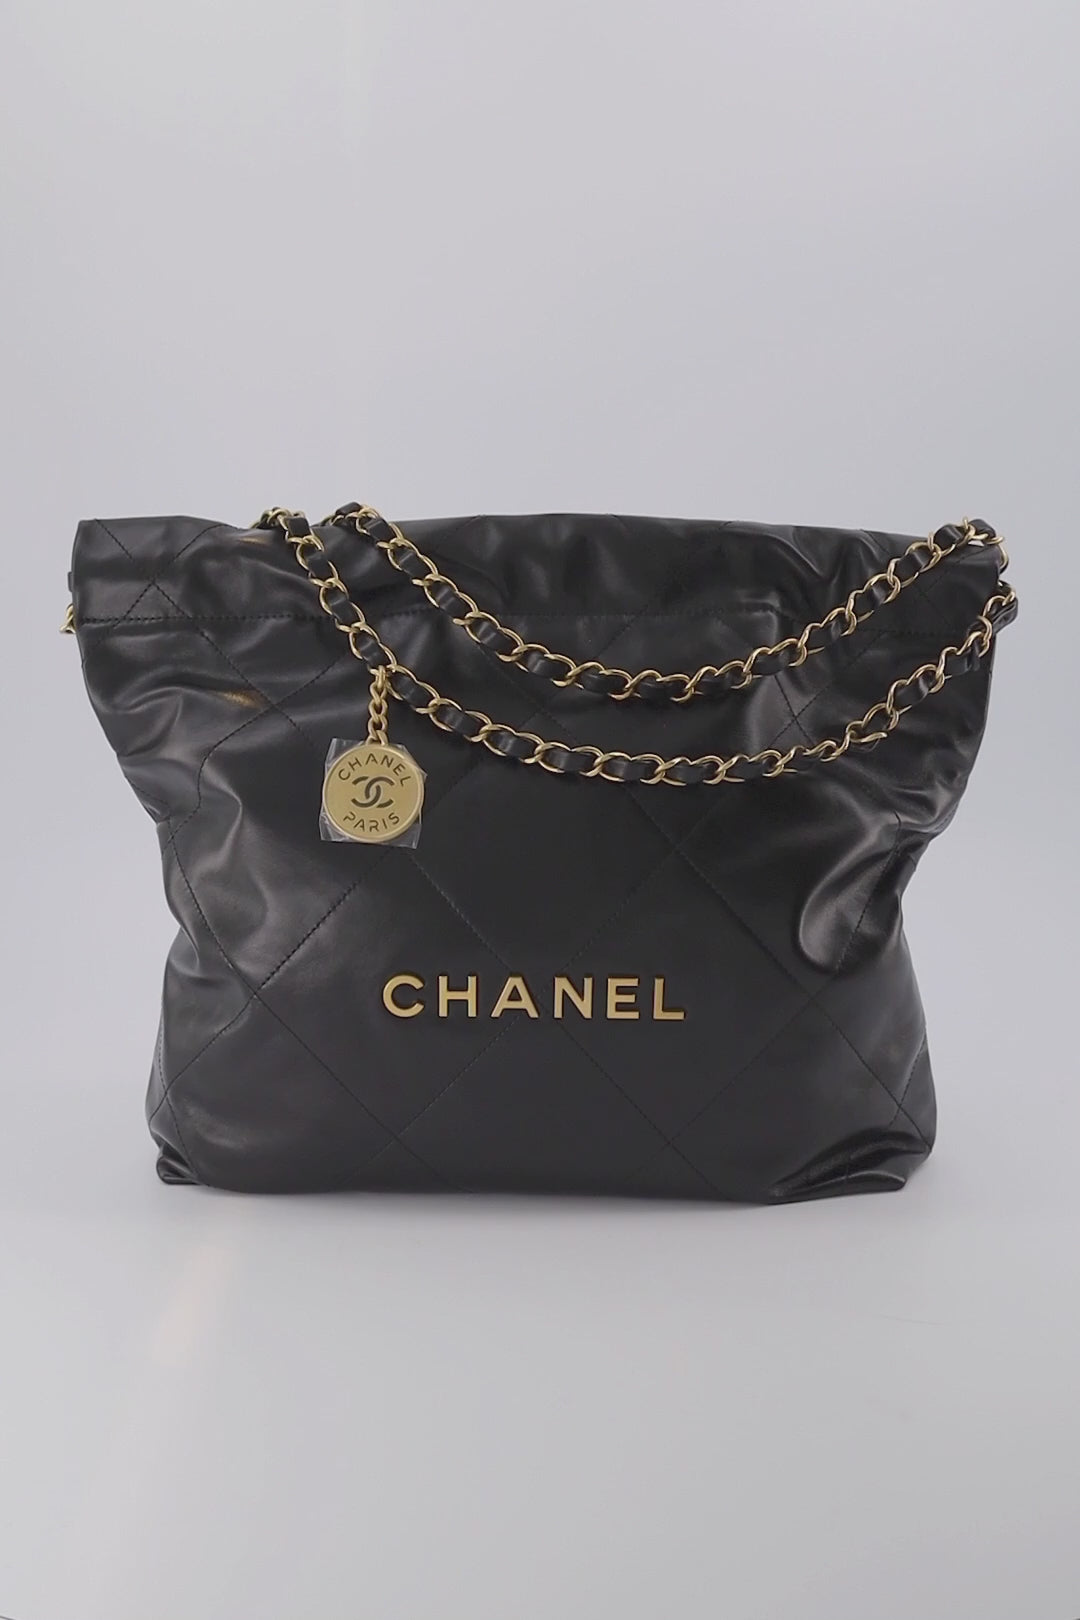 KACAINJOY Black Soft Leather Small Crossbody Bags Purses Belt Bag for Women  Quilted Chain Shoulder Bag Lady Casual Lattice Handbag: Handbags